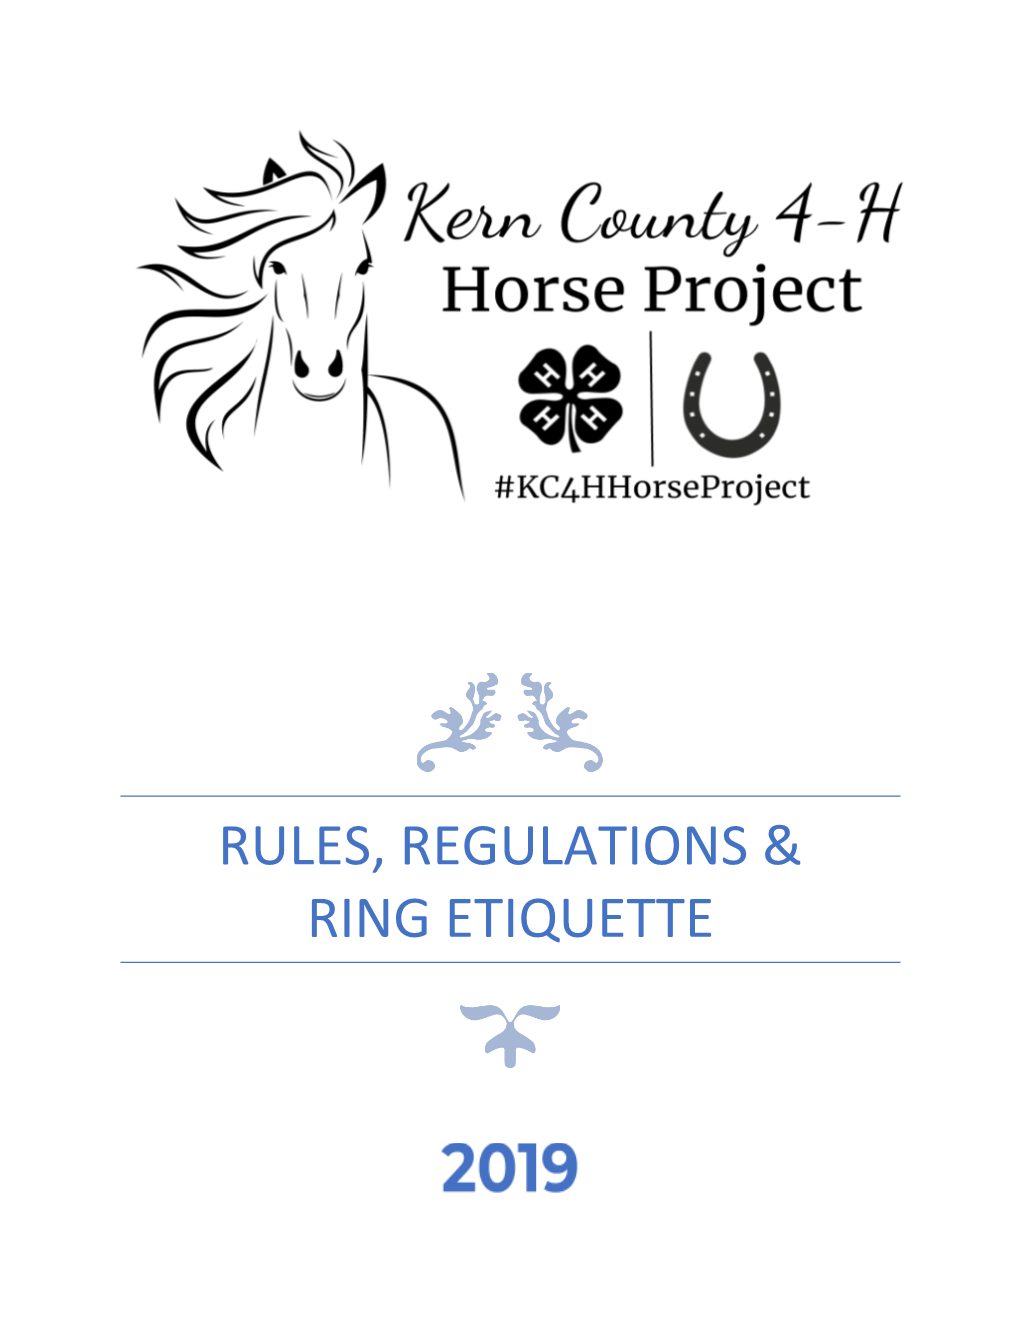 Rules, Regulations & Ring Etiquette